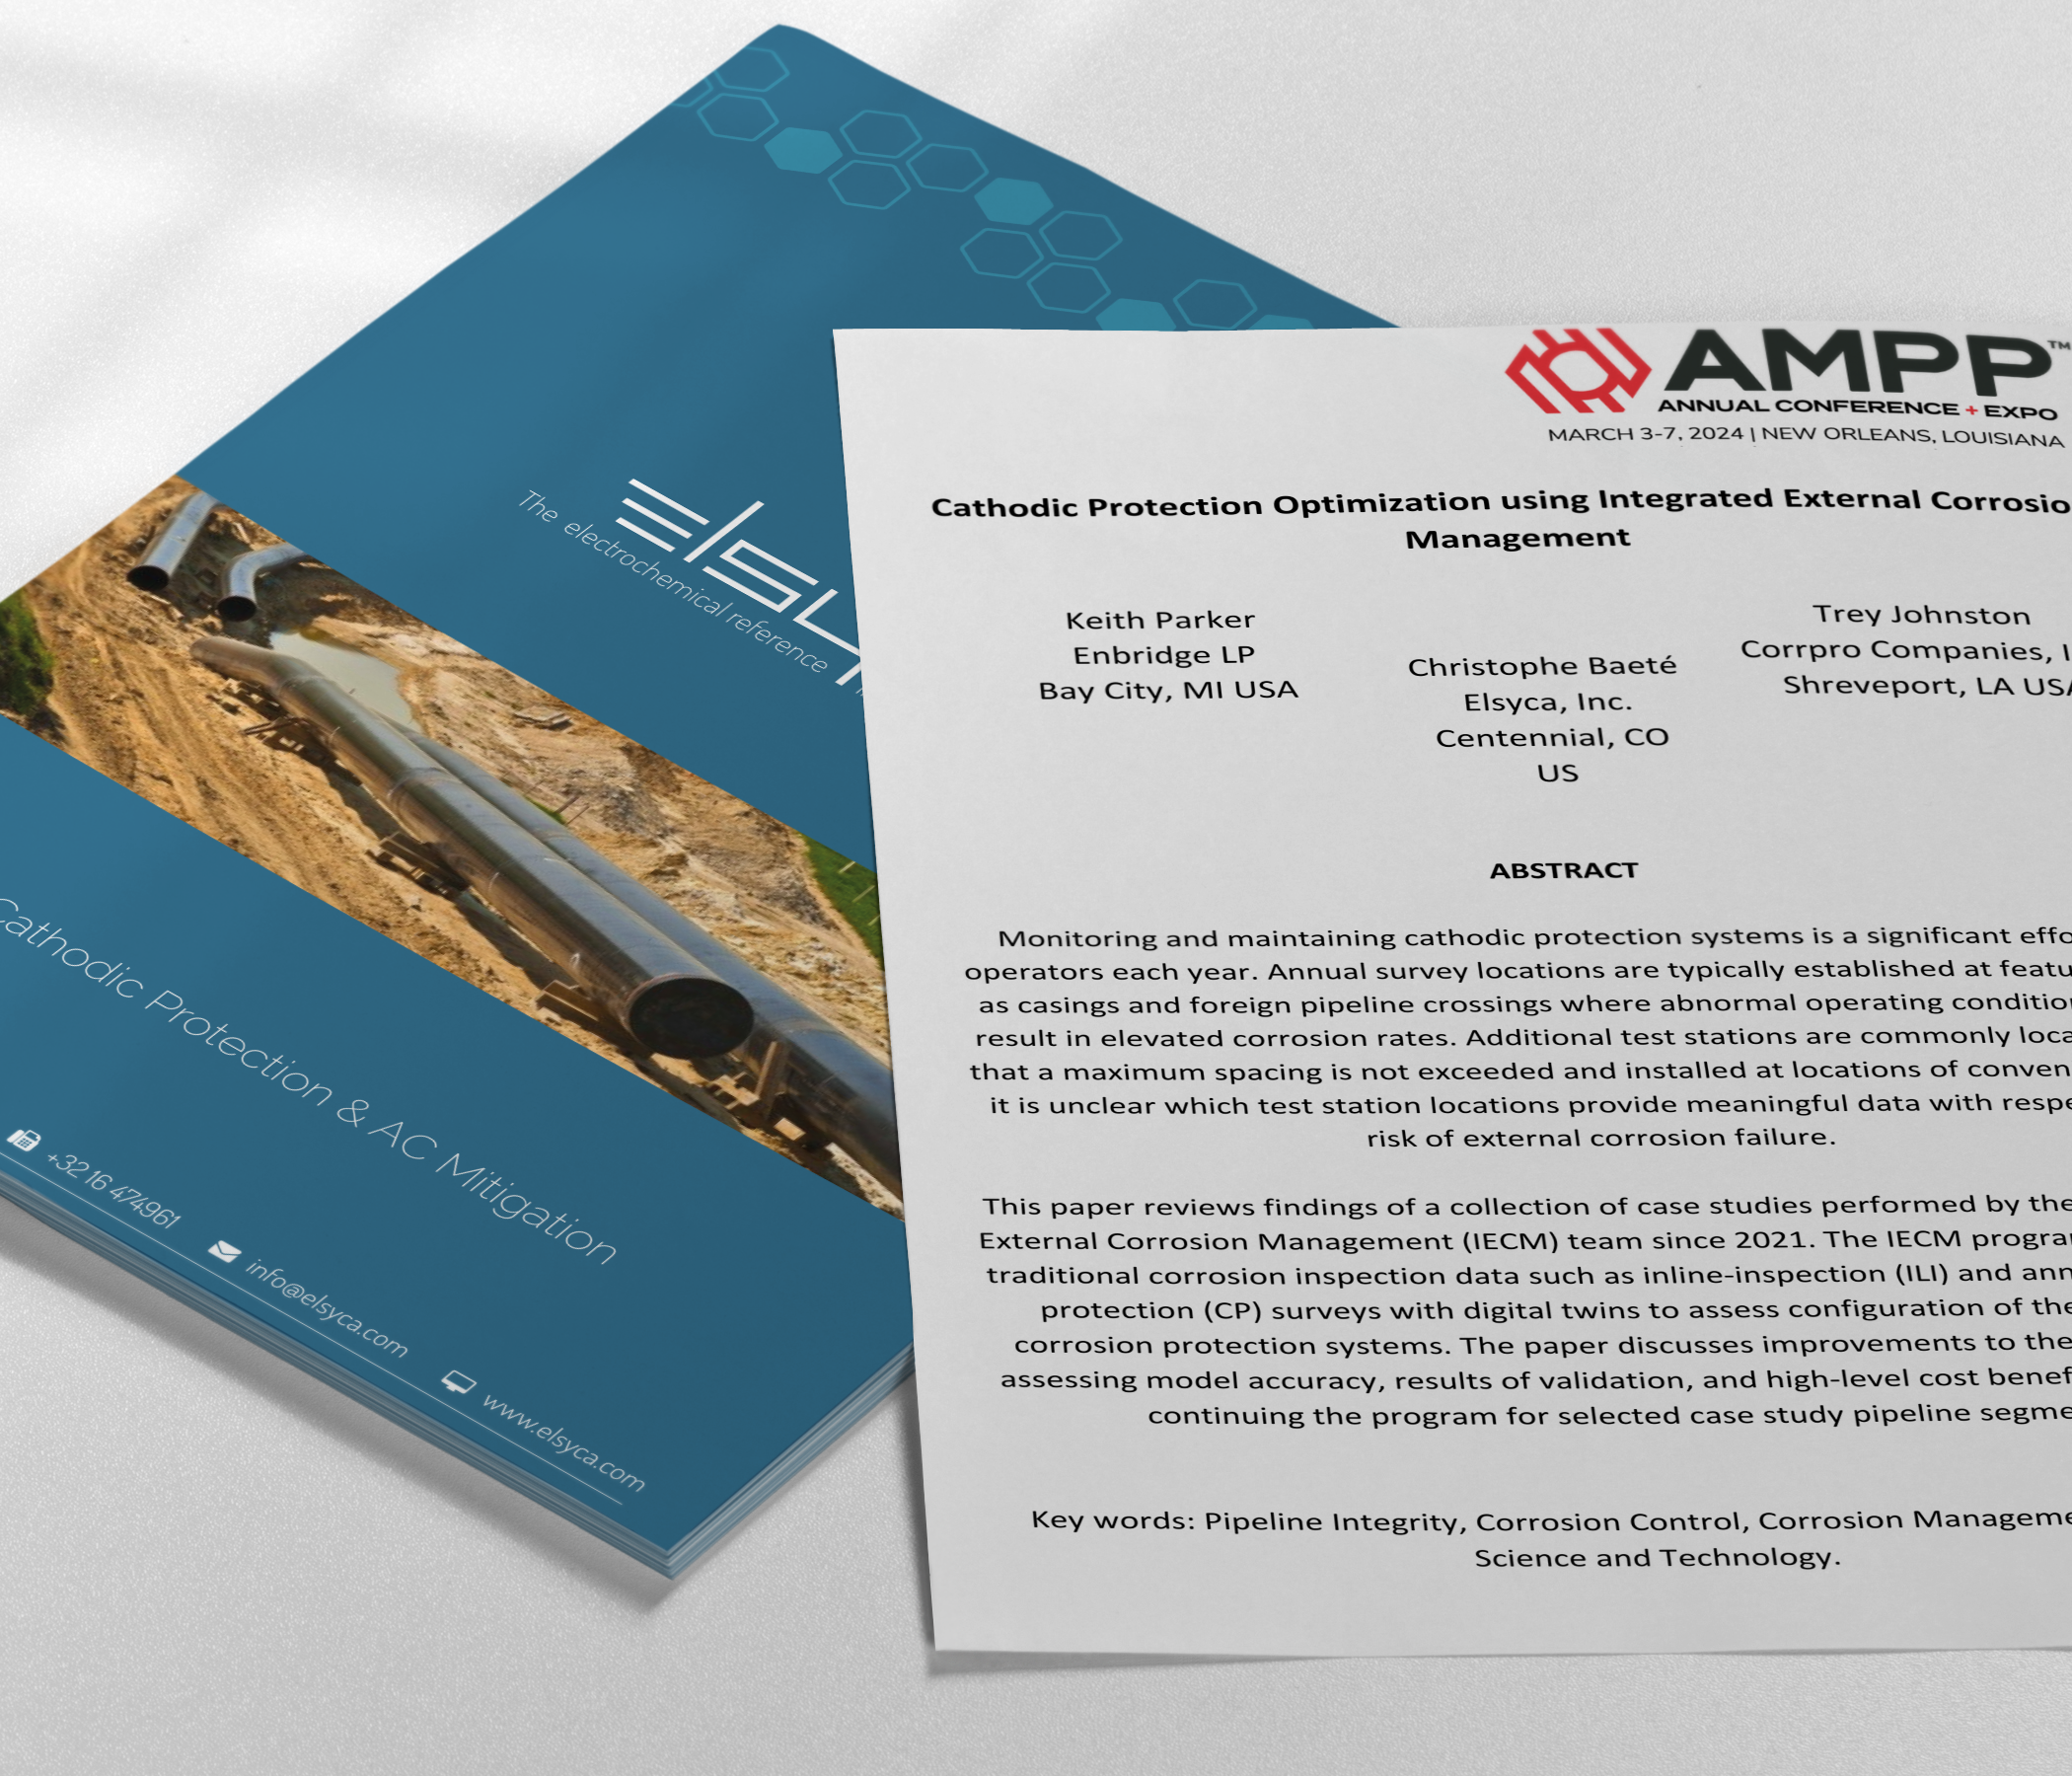 Cathodic Protection Optimization using Integrated External Corrosion Management (AMPP 2024)